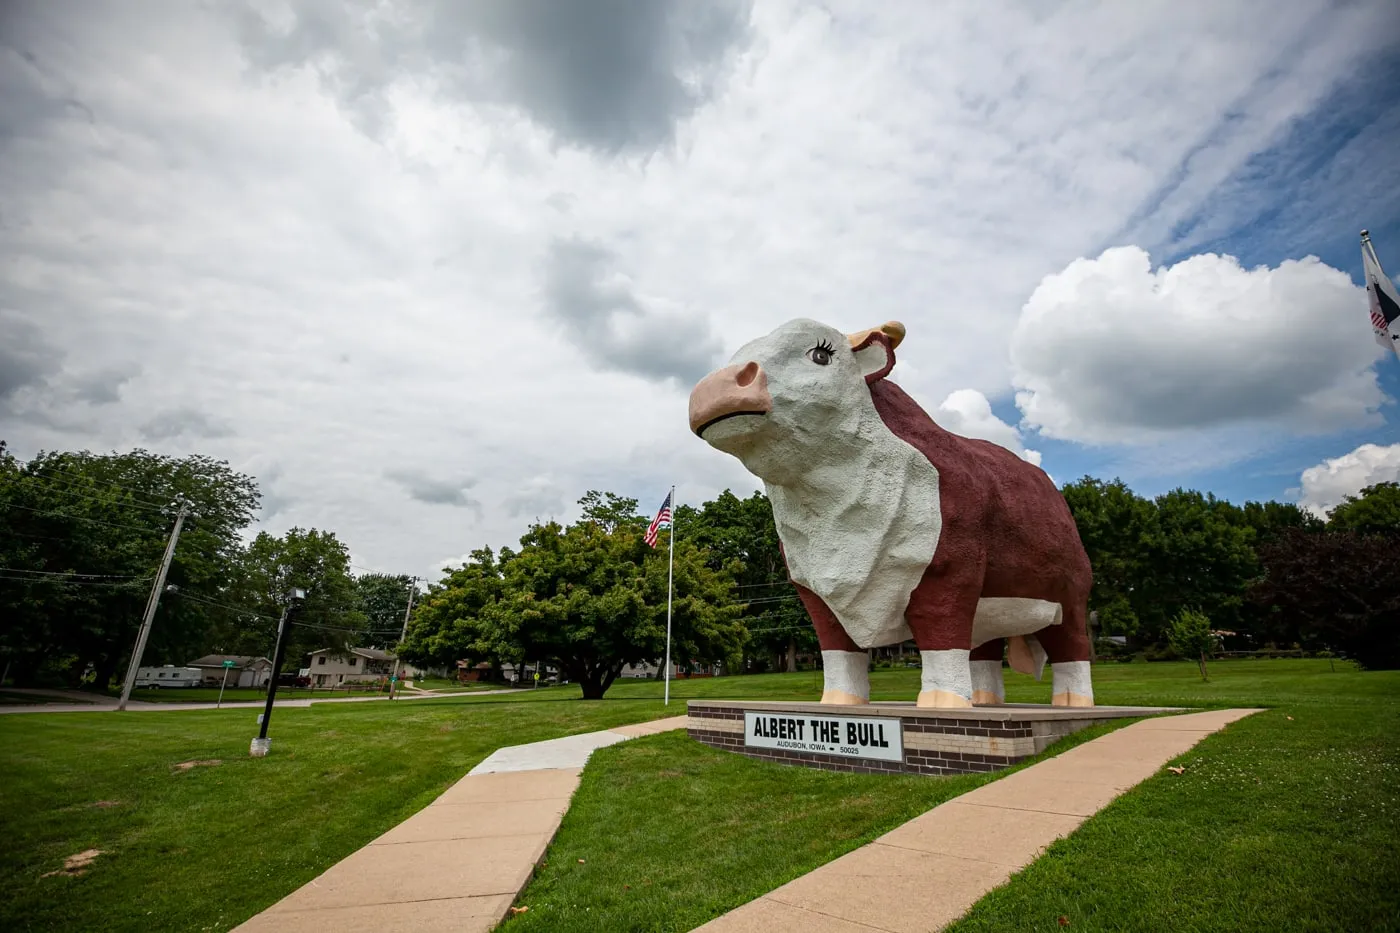 Albert the Bull - the World's Largest Bull in Audubon, Iowa | Iowa Roadside Attractions